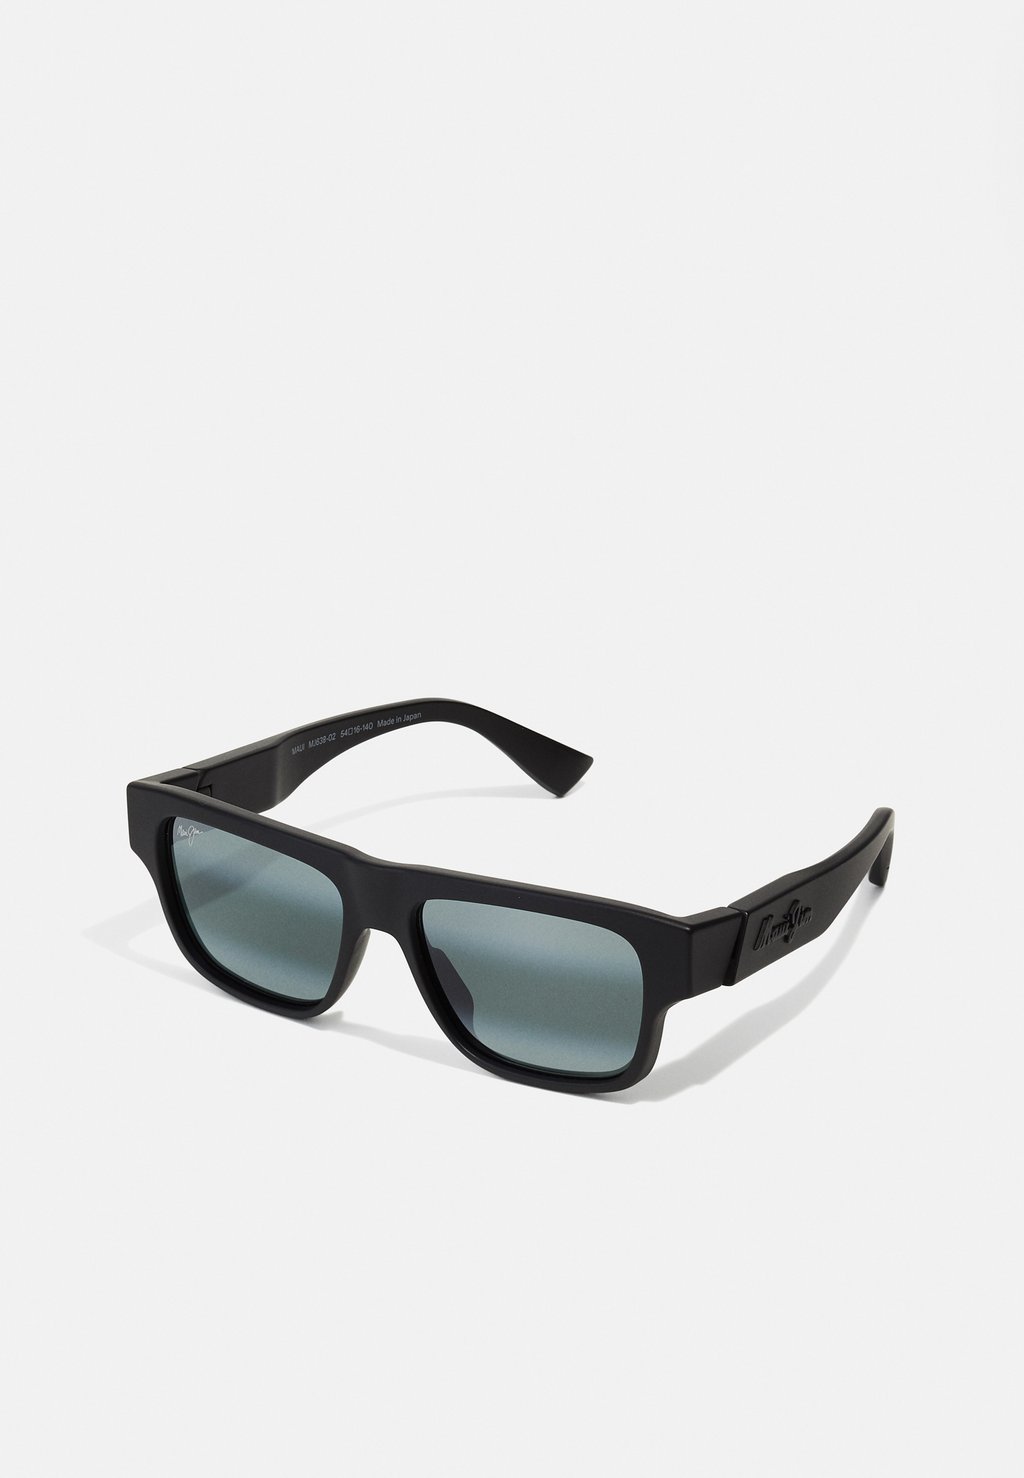 Солнцезащитные очки UNISEX Maui Jim, цвет black/grey цена и фото